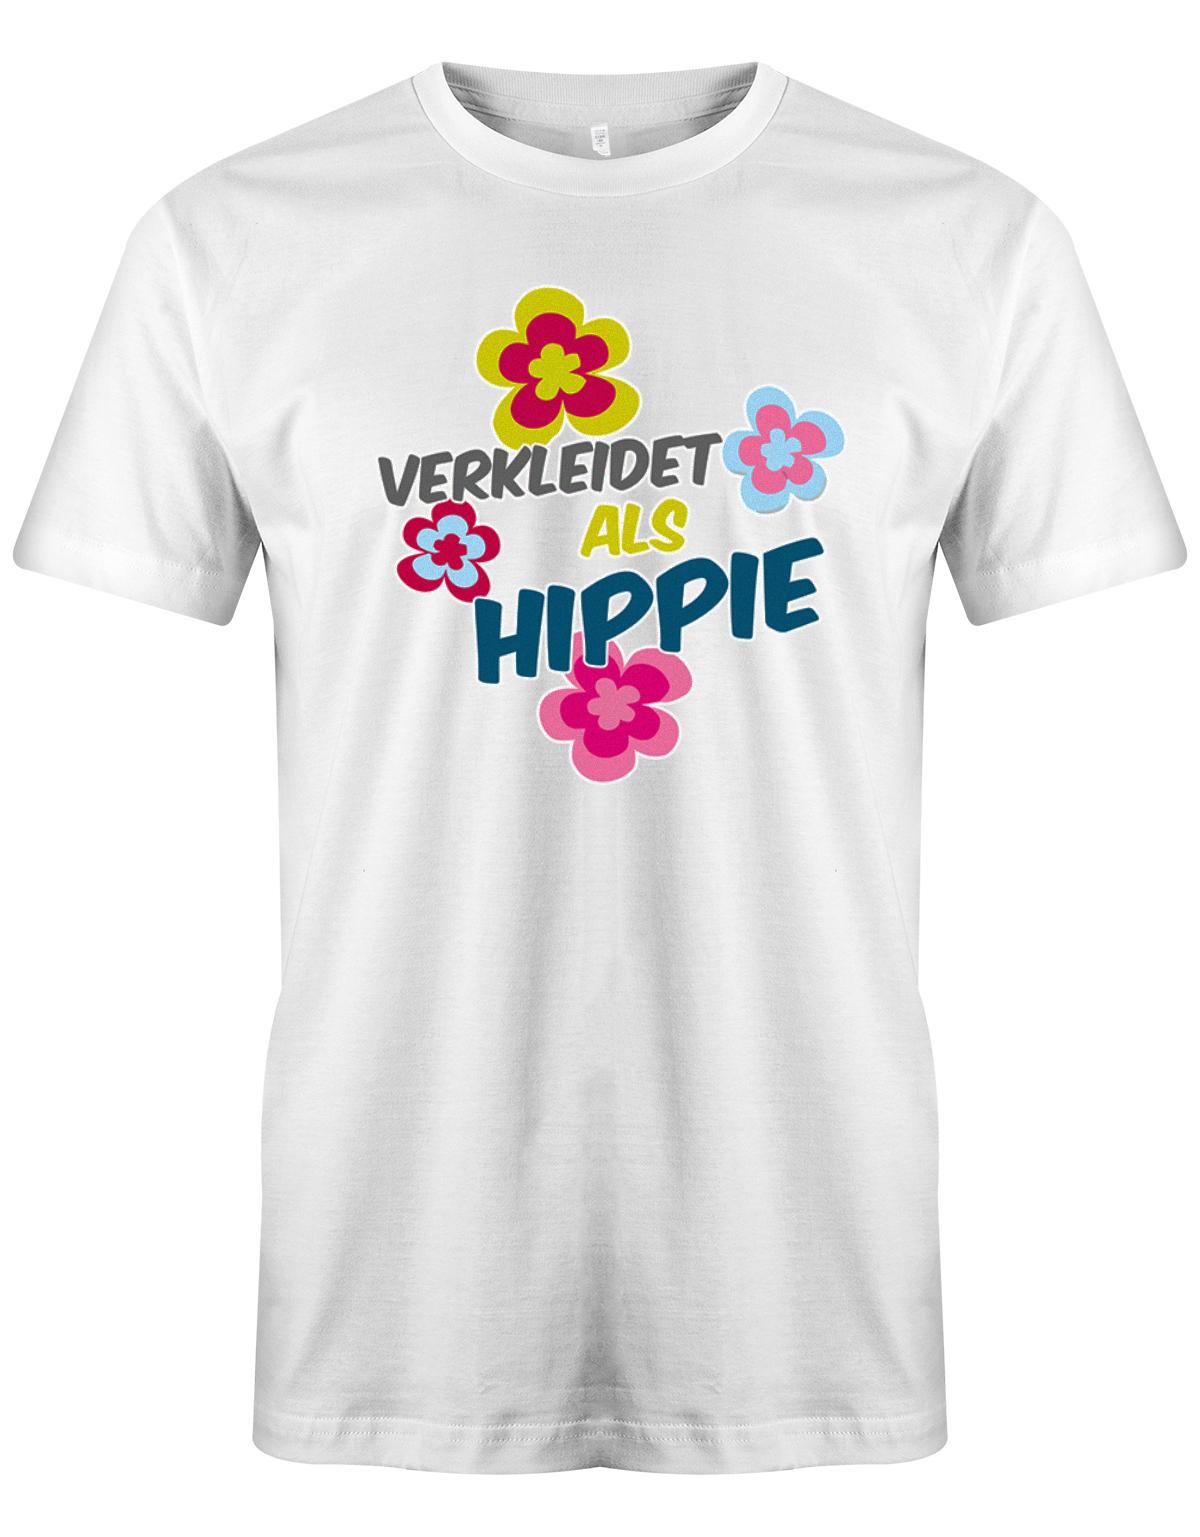 Verkleidet-als-Hippi-Karneval-Fasching-Kost-m-Ersatz-Shirt-Herren-Weiss